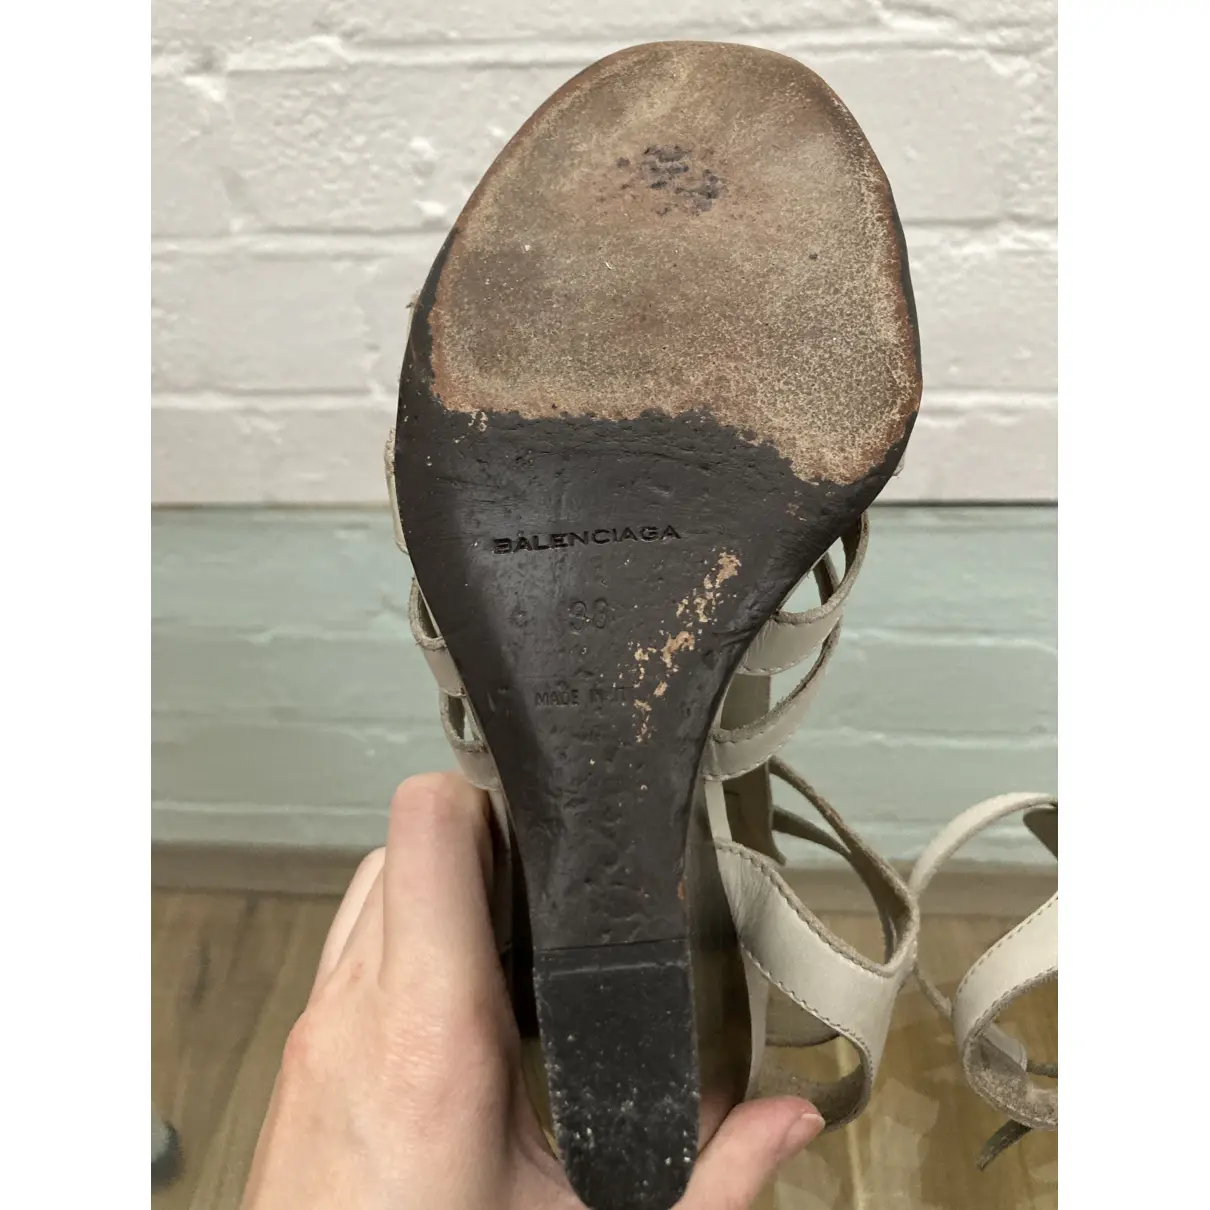 Leather sandals Balenciaga